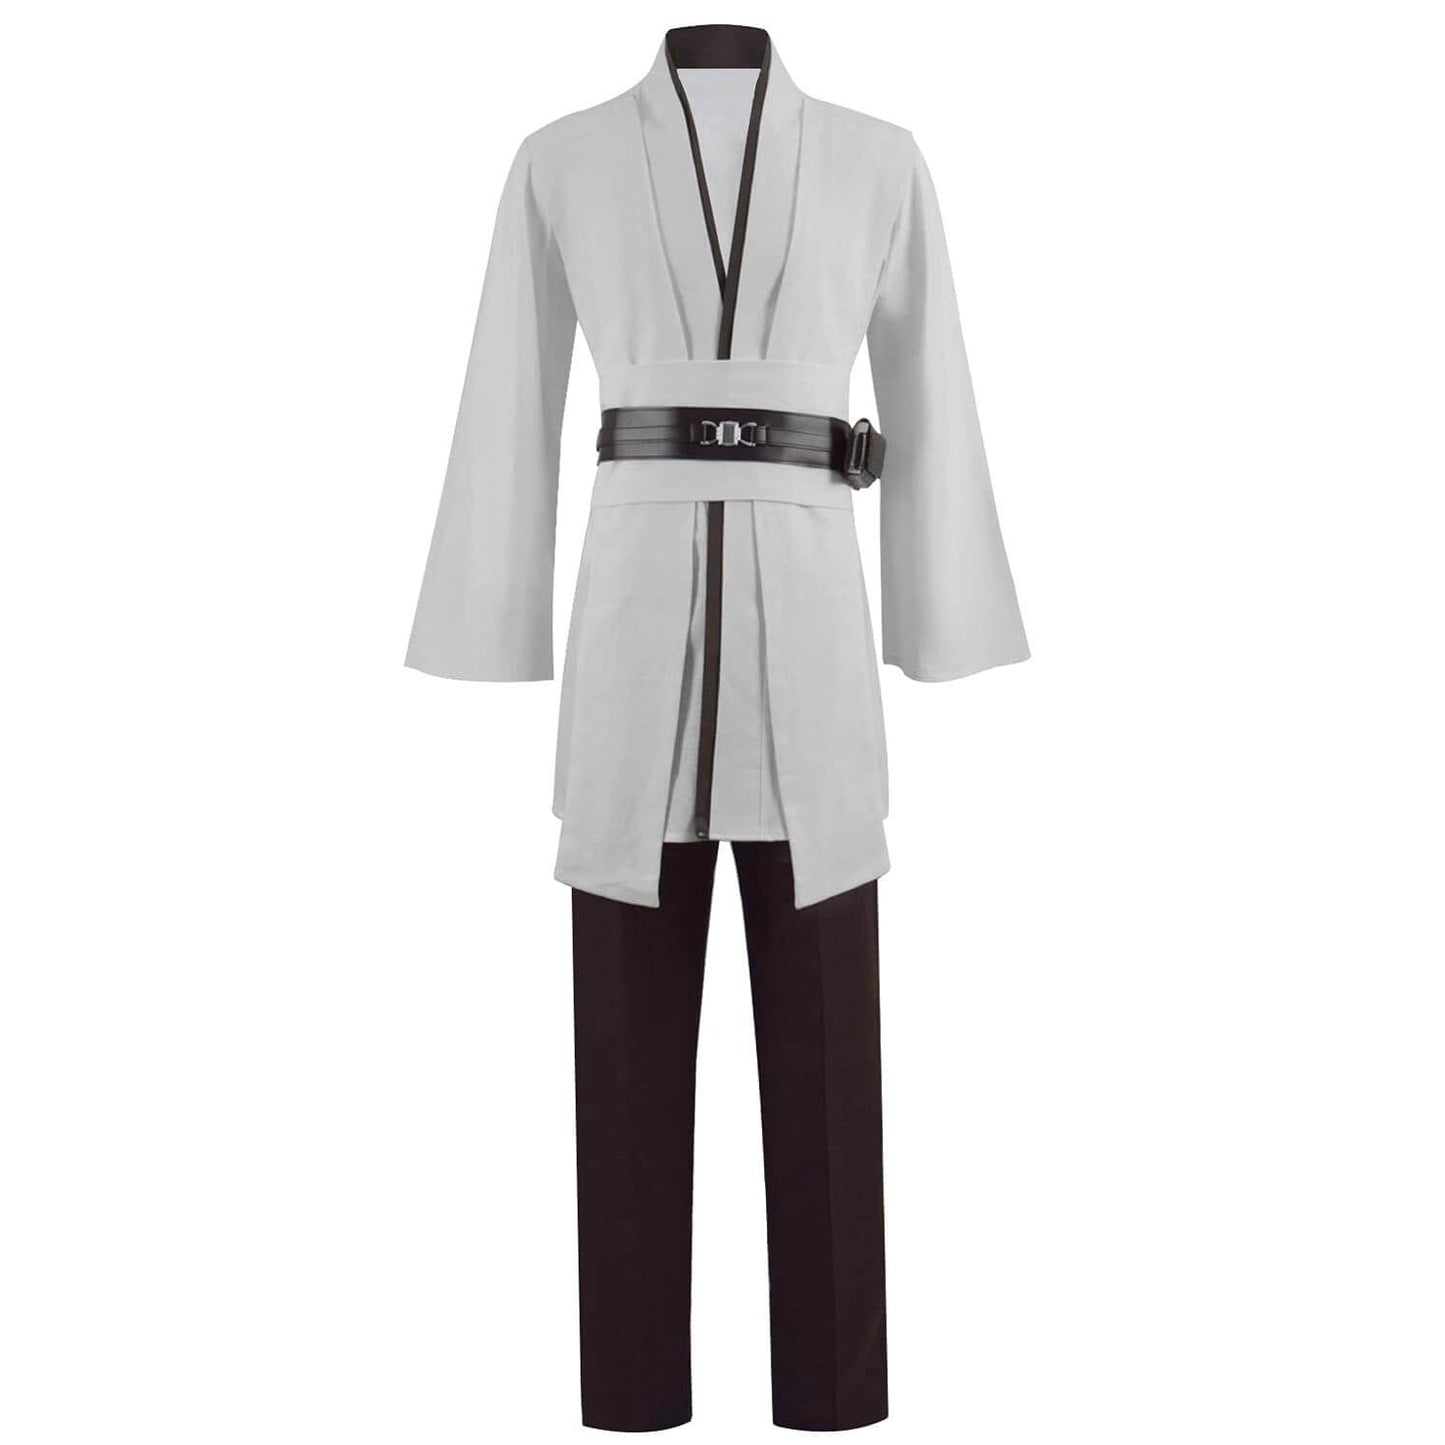 Adult Jedi Robe Obi Wan Kenobi Tunic Cosplay Uniform Hooded Cloak Full Jedi Costume